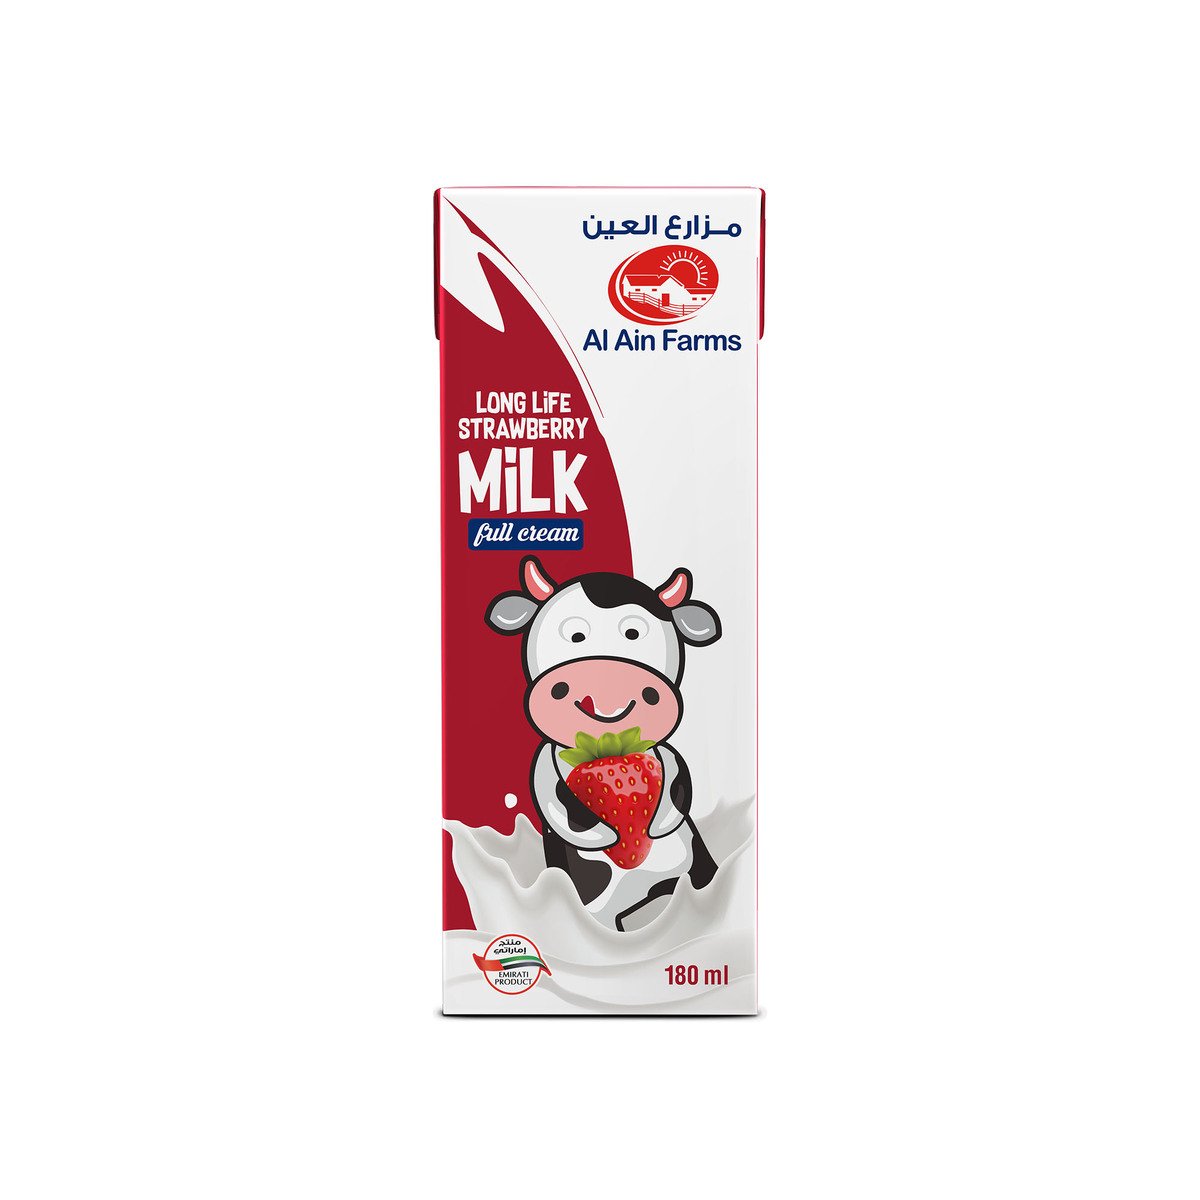 Al Ain Long Life Strawberry Milk Drink 6 x 180ml